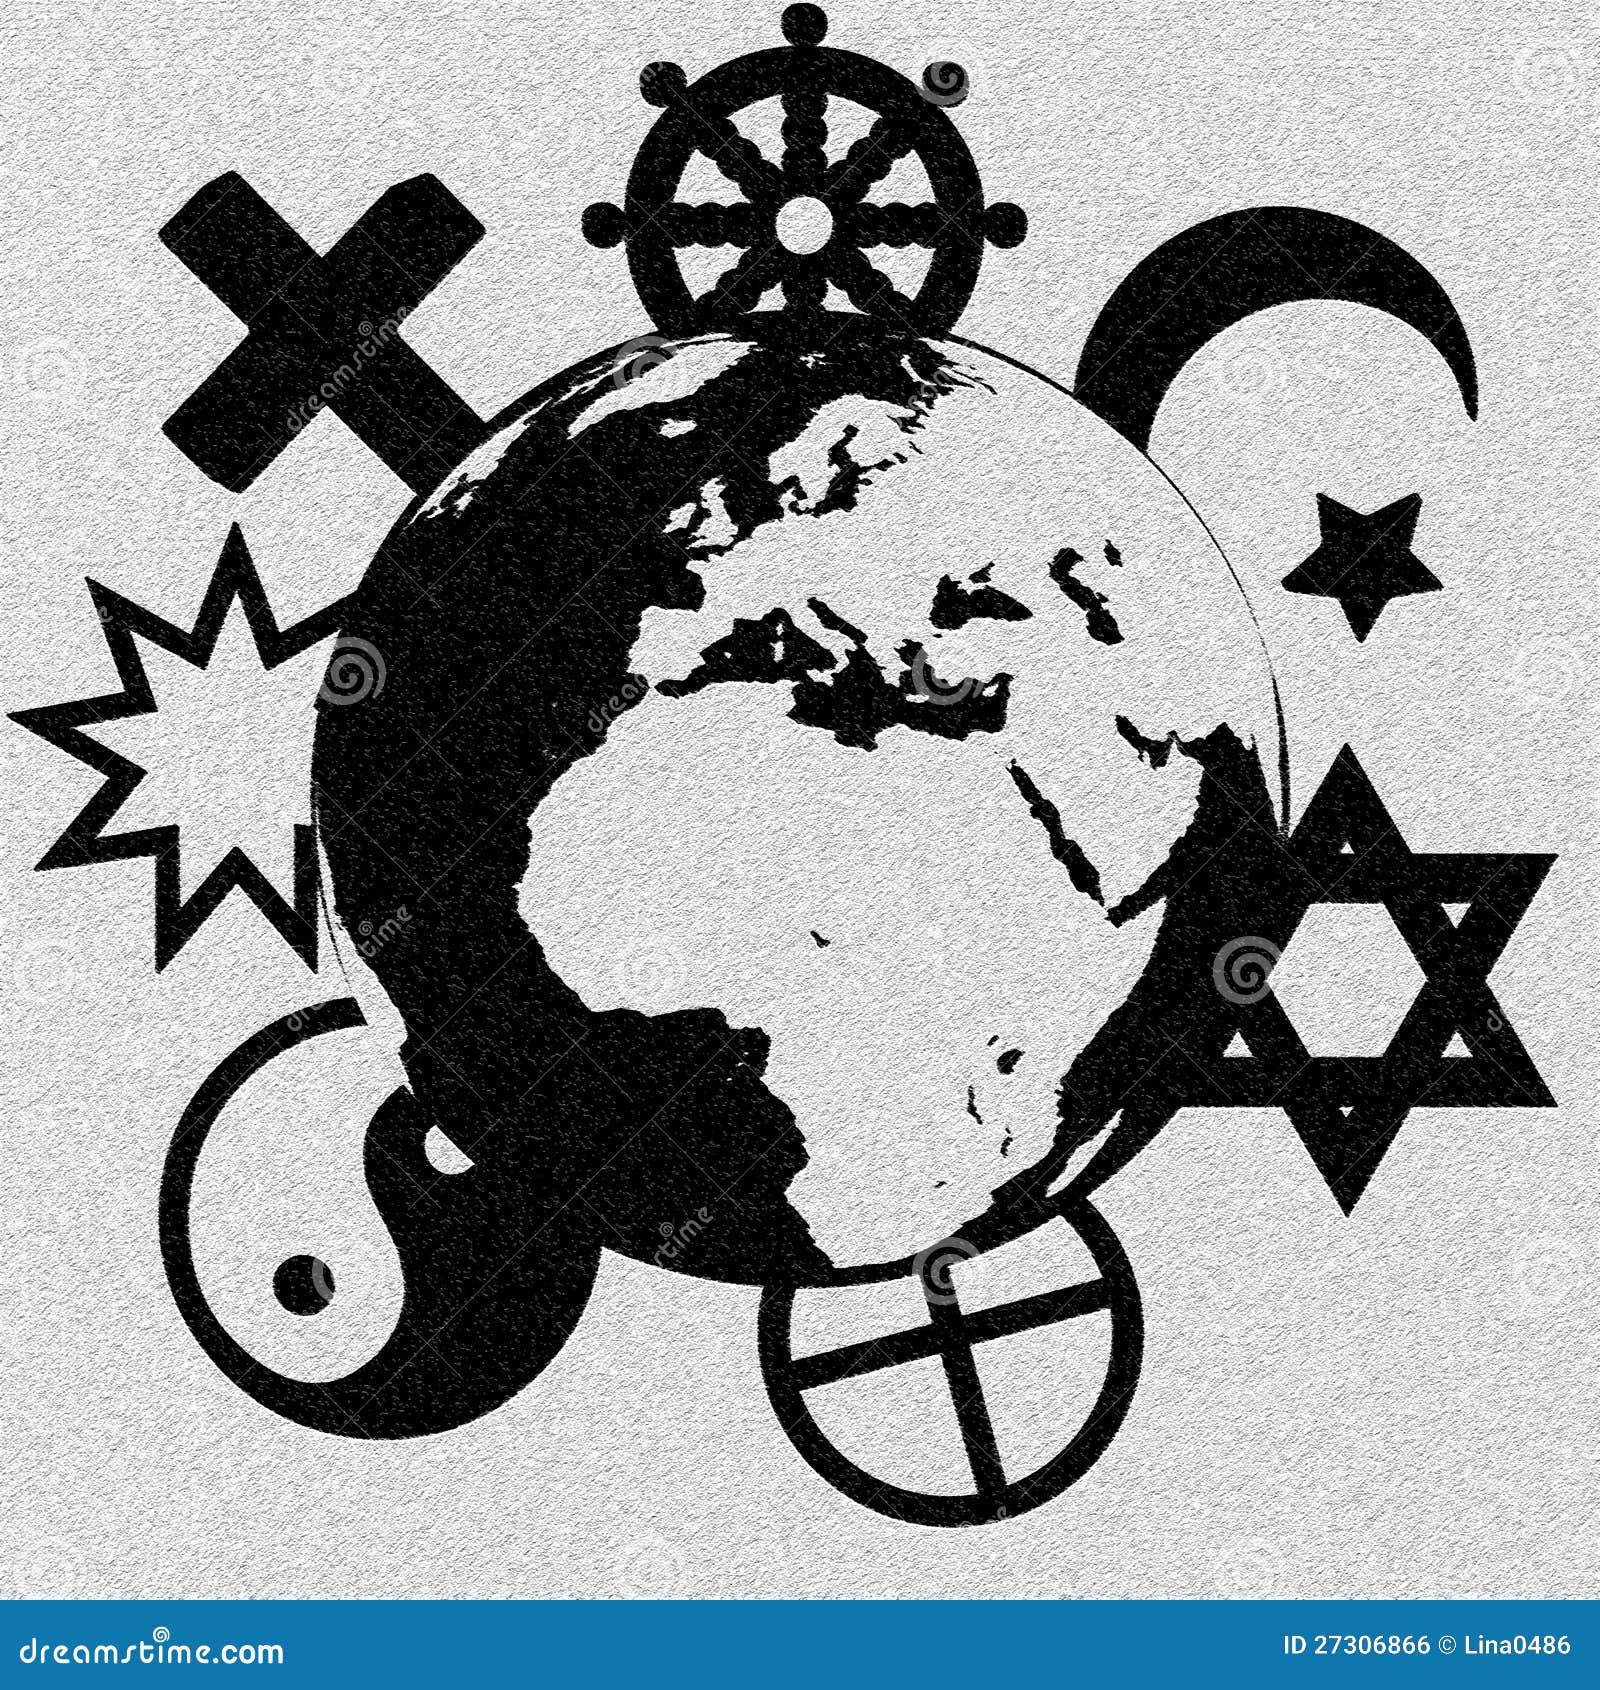 Religious Symbols Royalty Free Stock Image - Image: 27306866